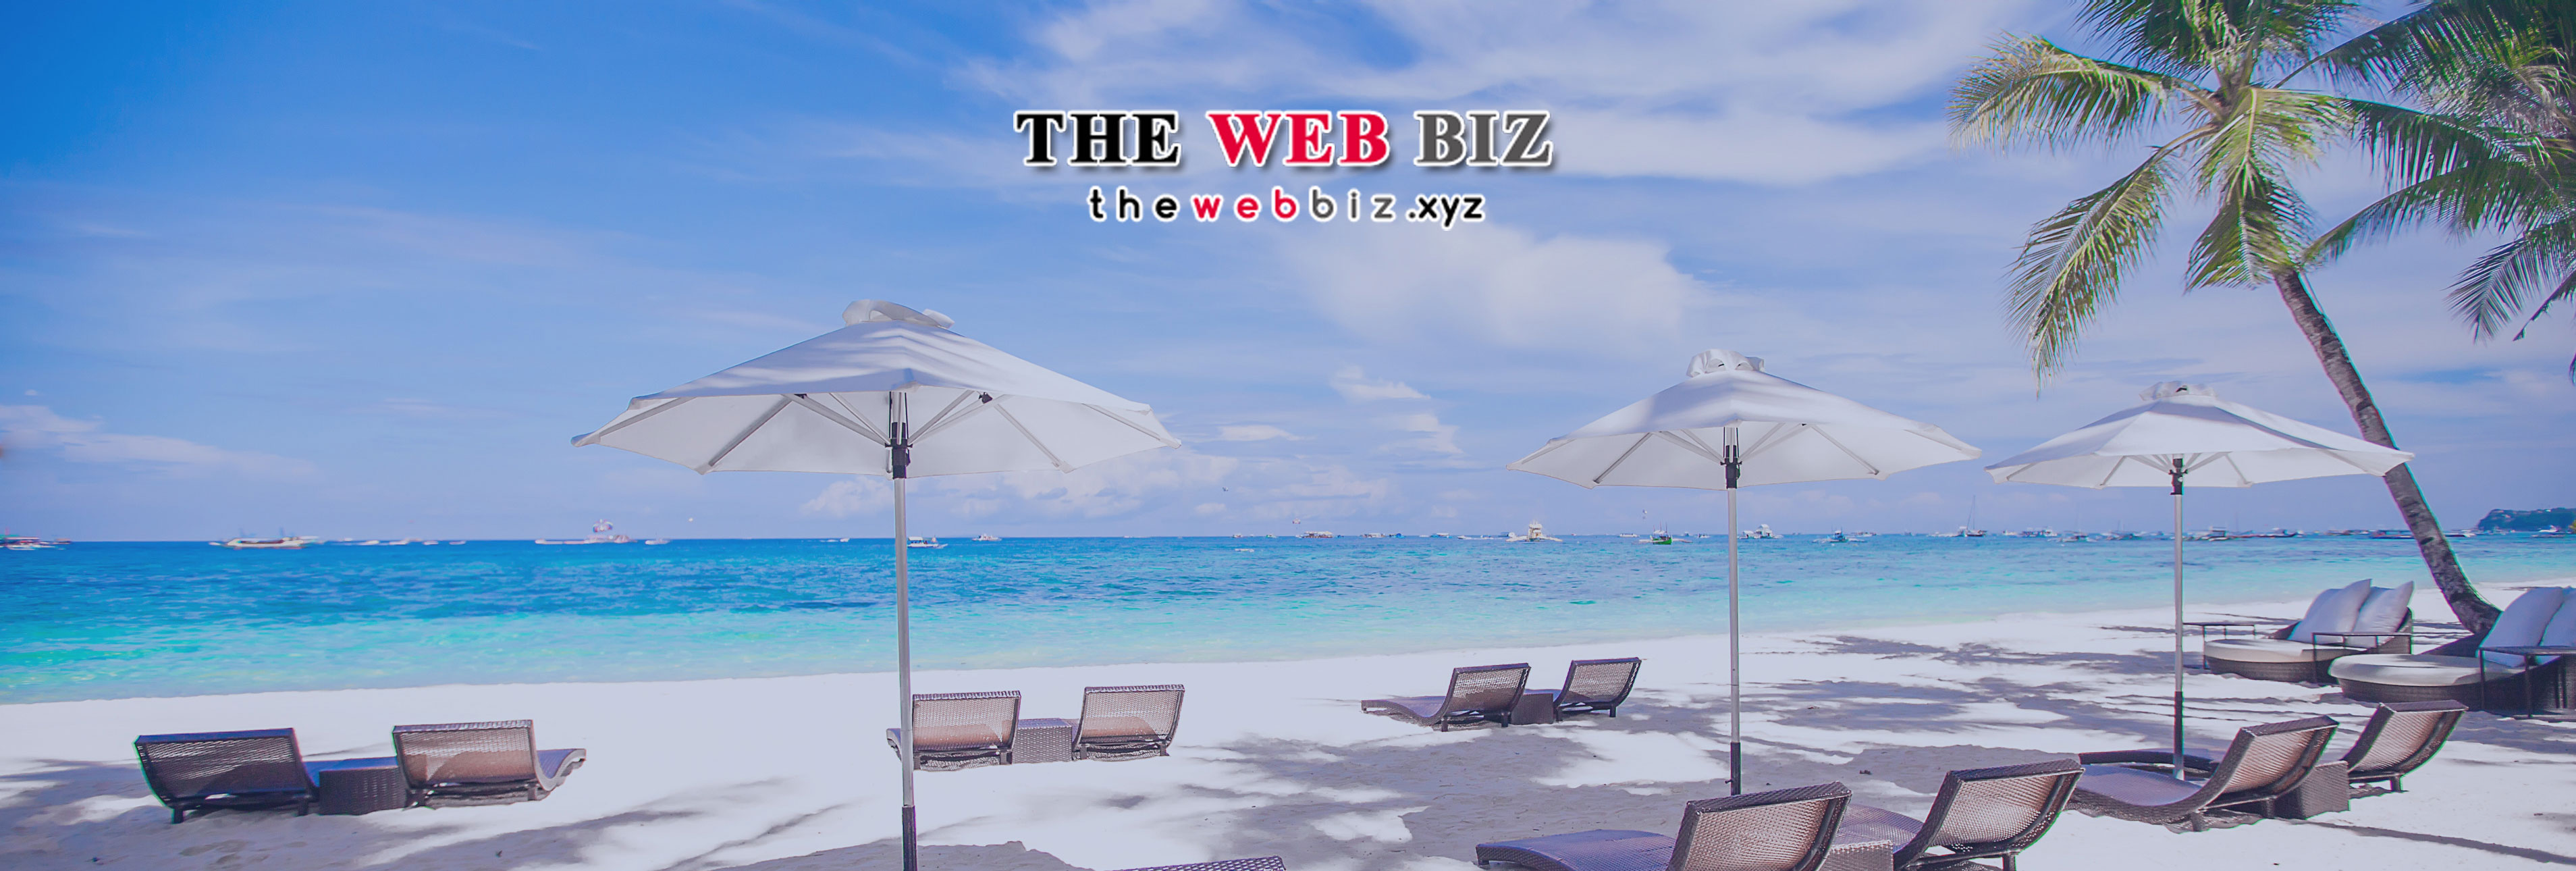 THE WEB BIZ